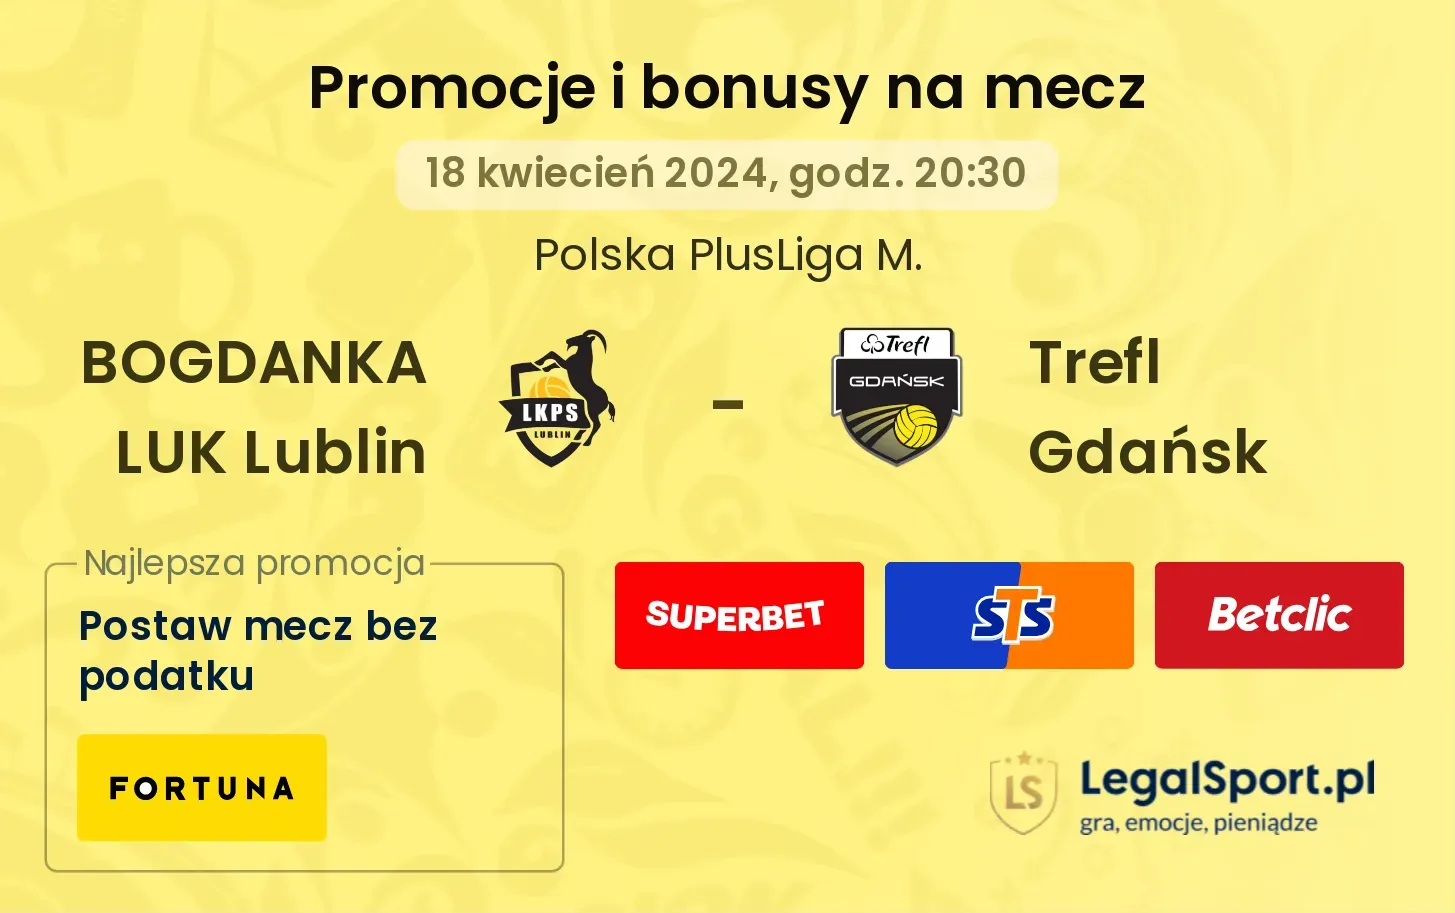 BOGDANKA LUK Lublin - Trefl Gdańsk promocje bonusy na mecz